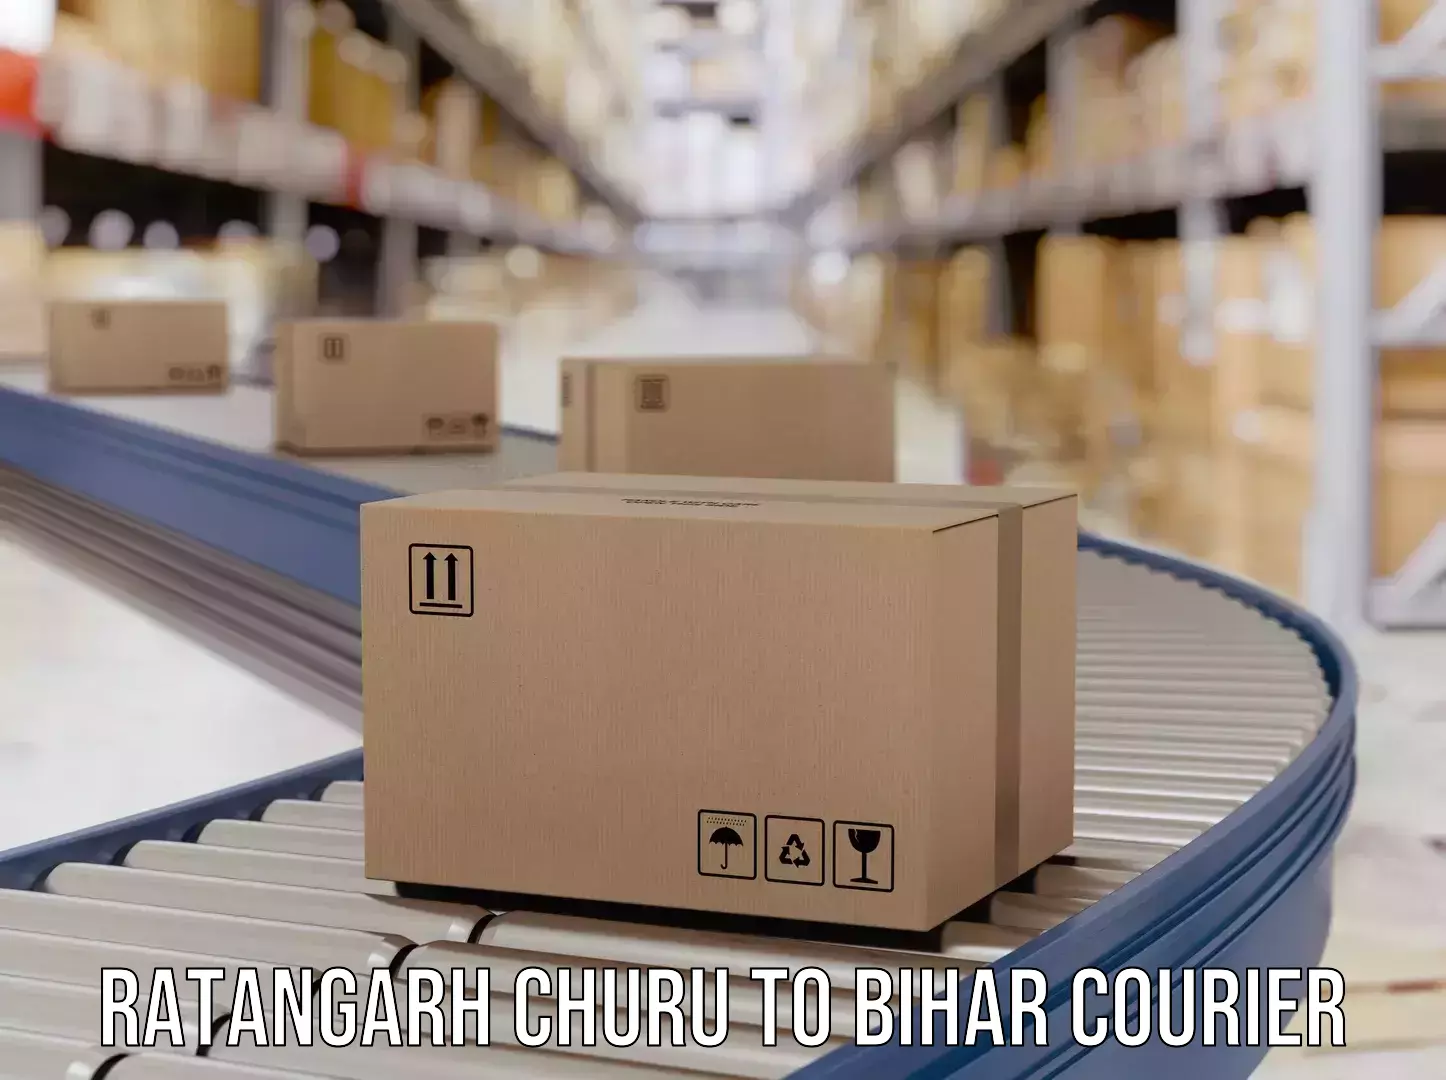 24/7 courier service Ratangarh Churu to Goh Aurangabad